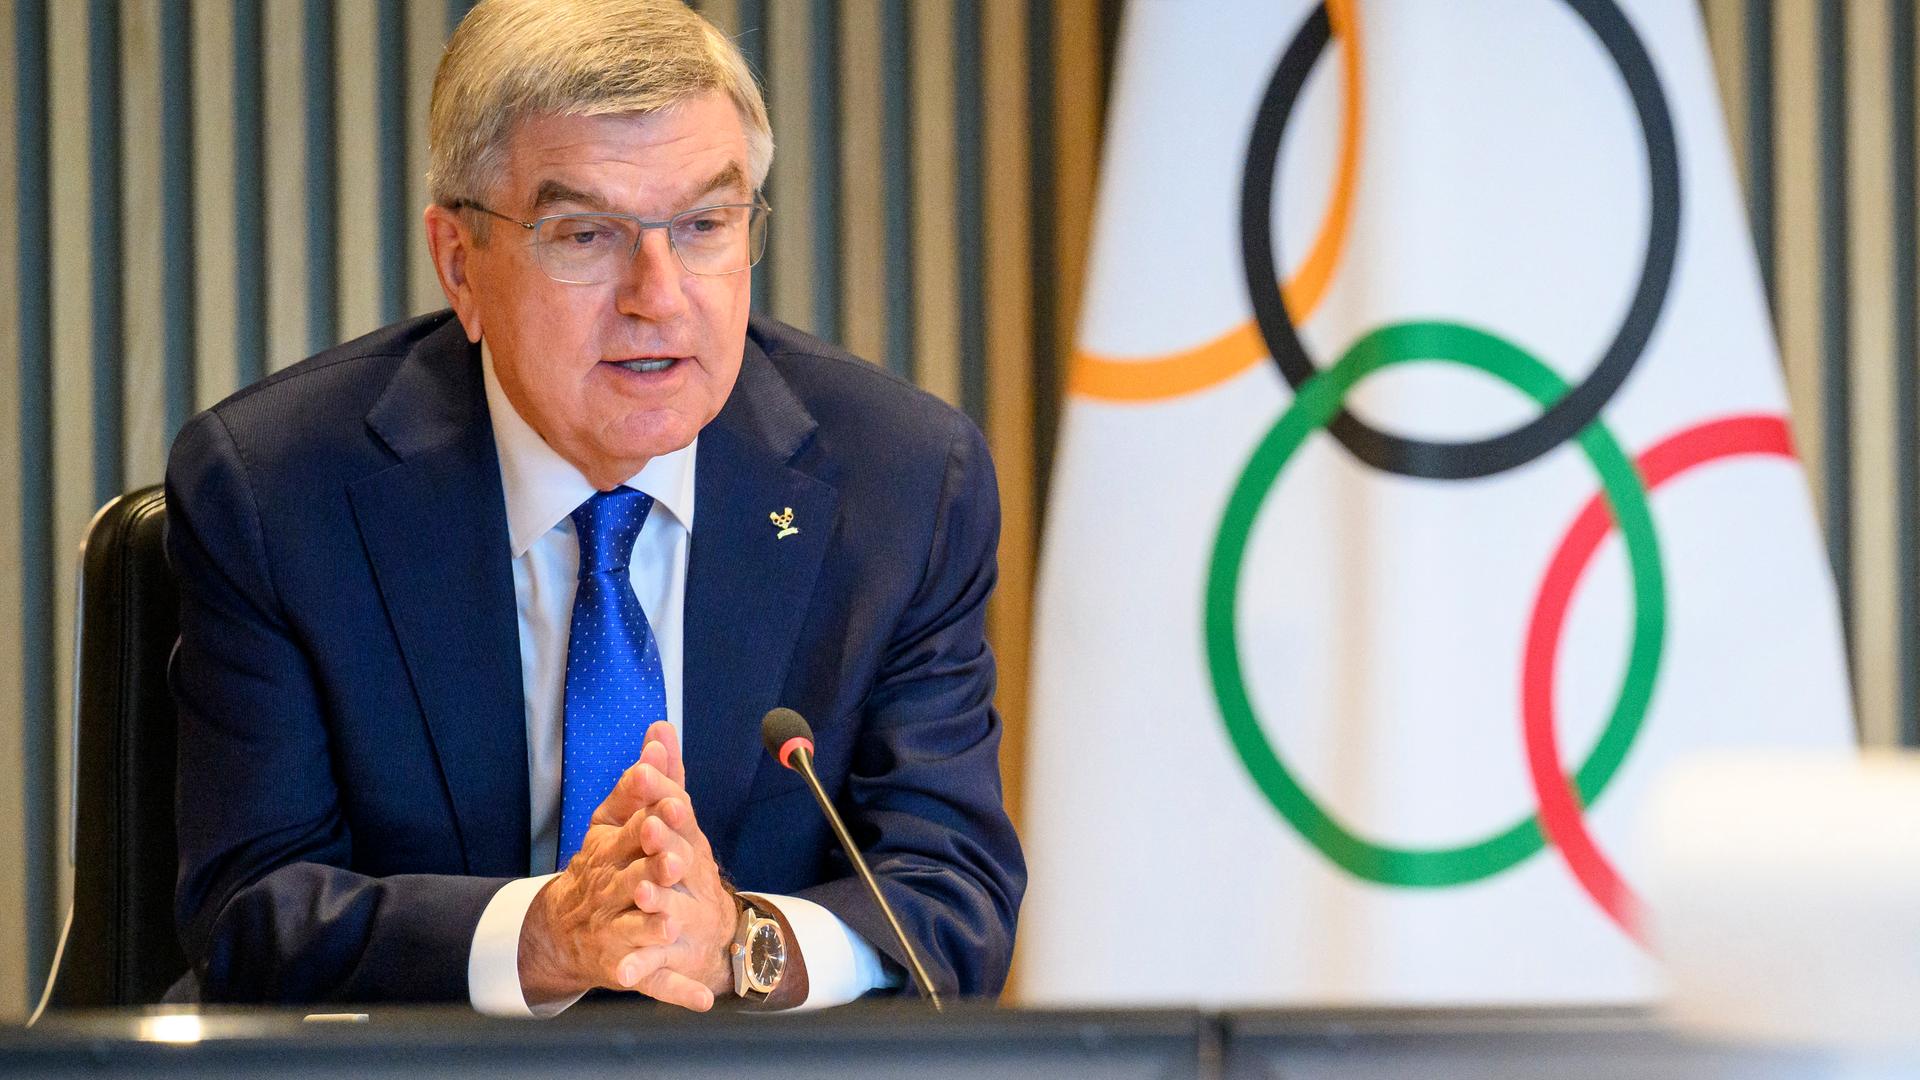 IOC-Pläne zur Wiederaufnahme Russlands - "Ausschluss kann gerechtfertigt werden"